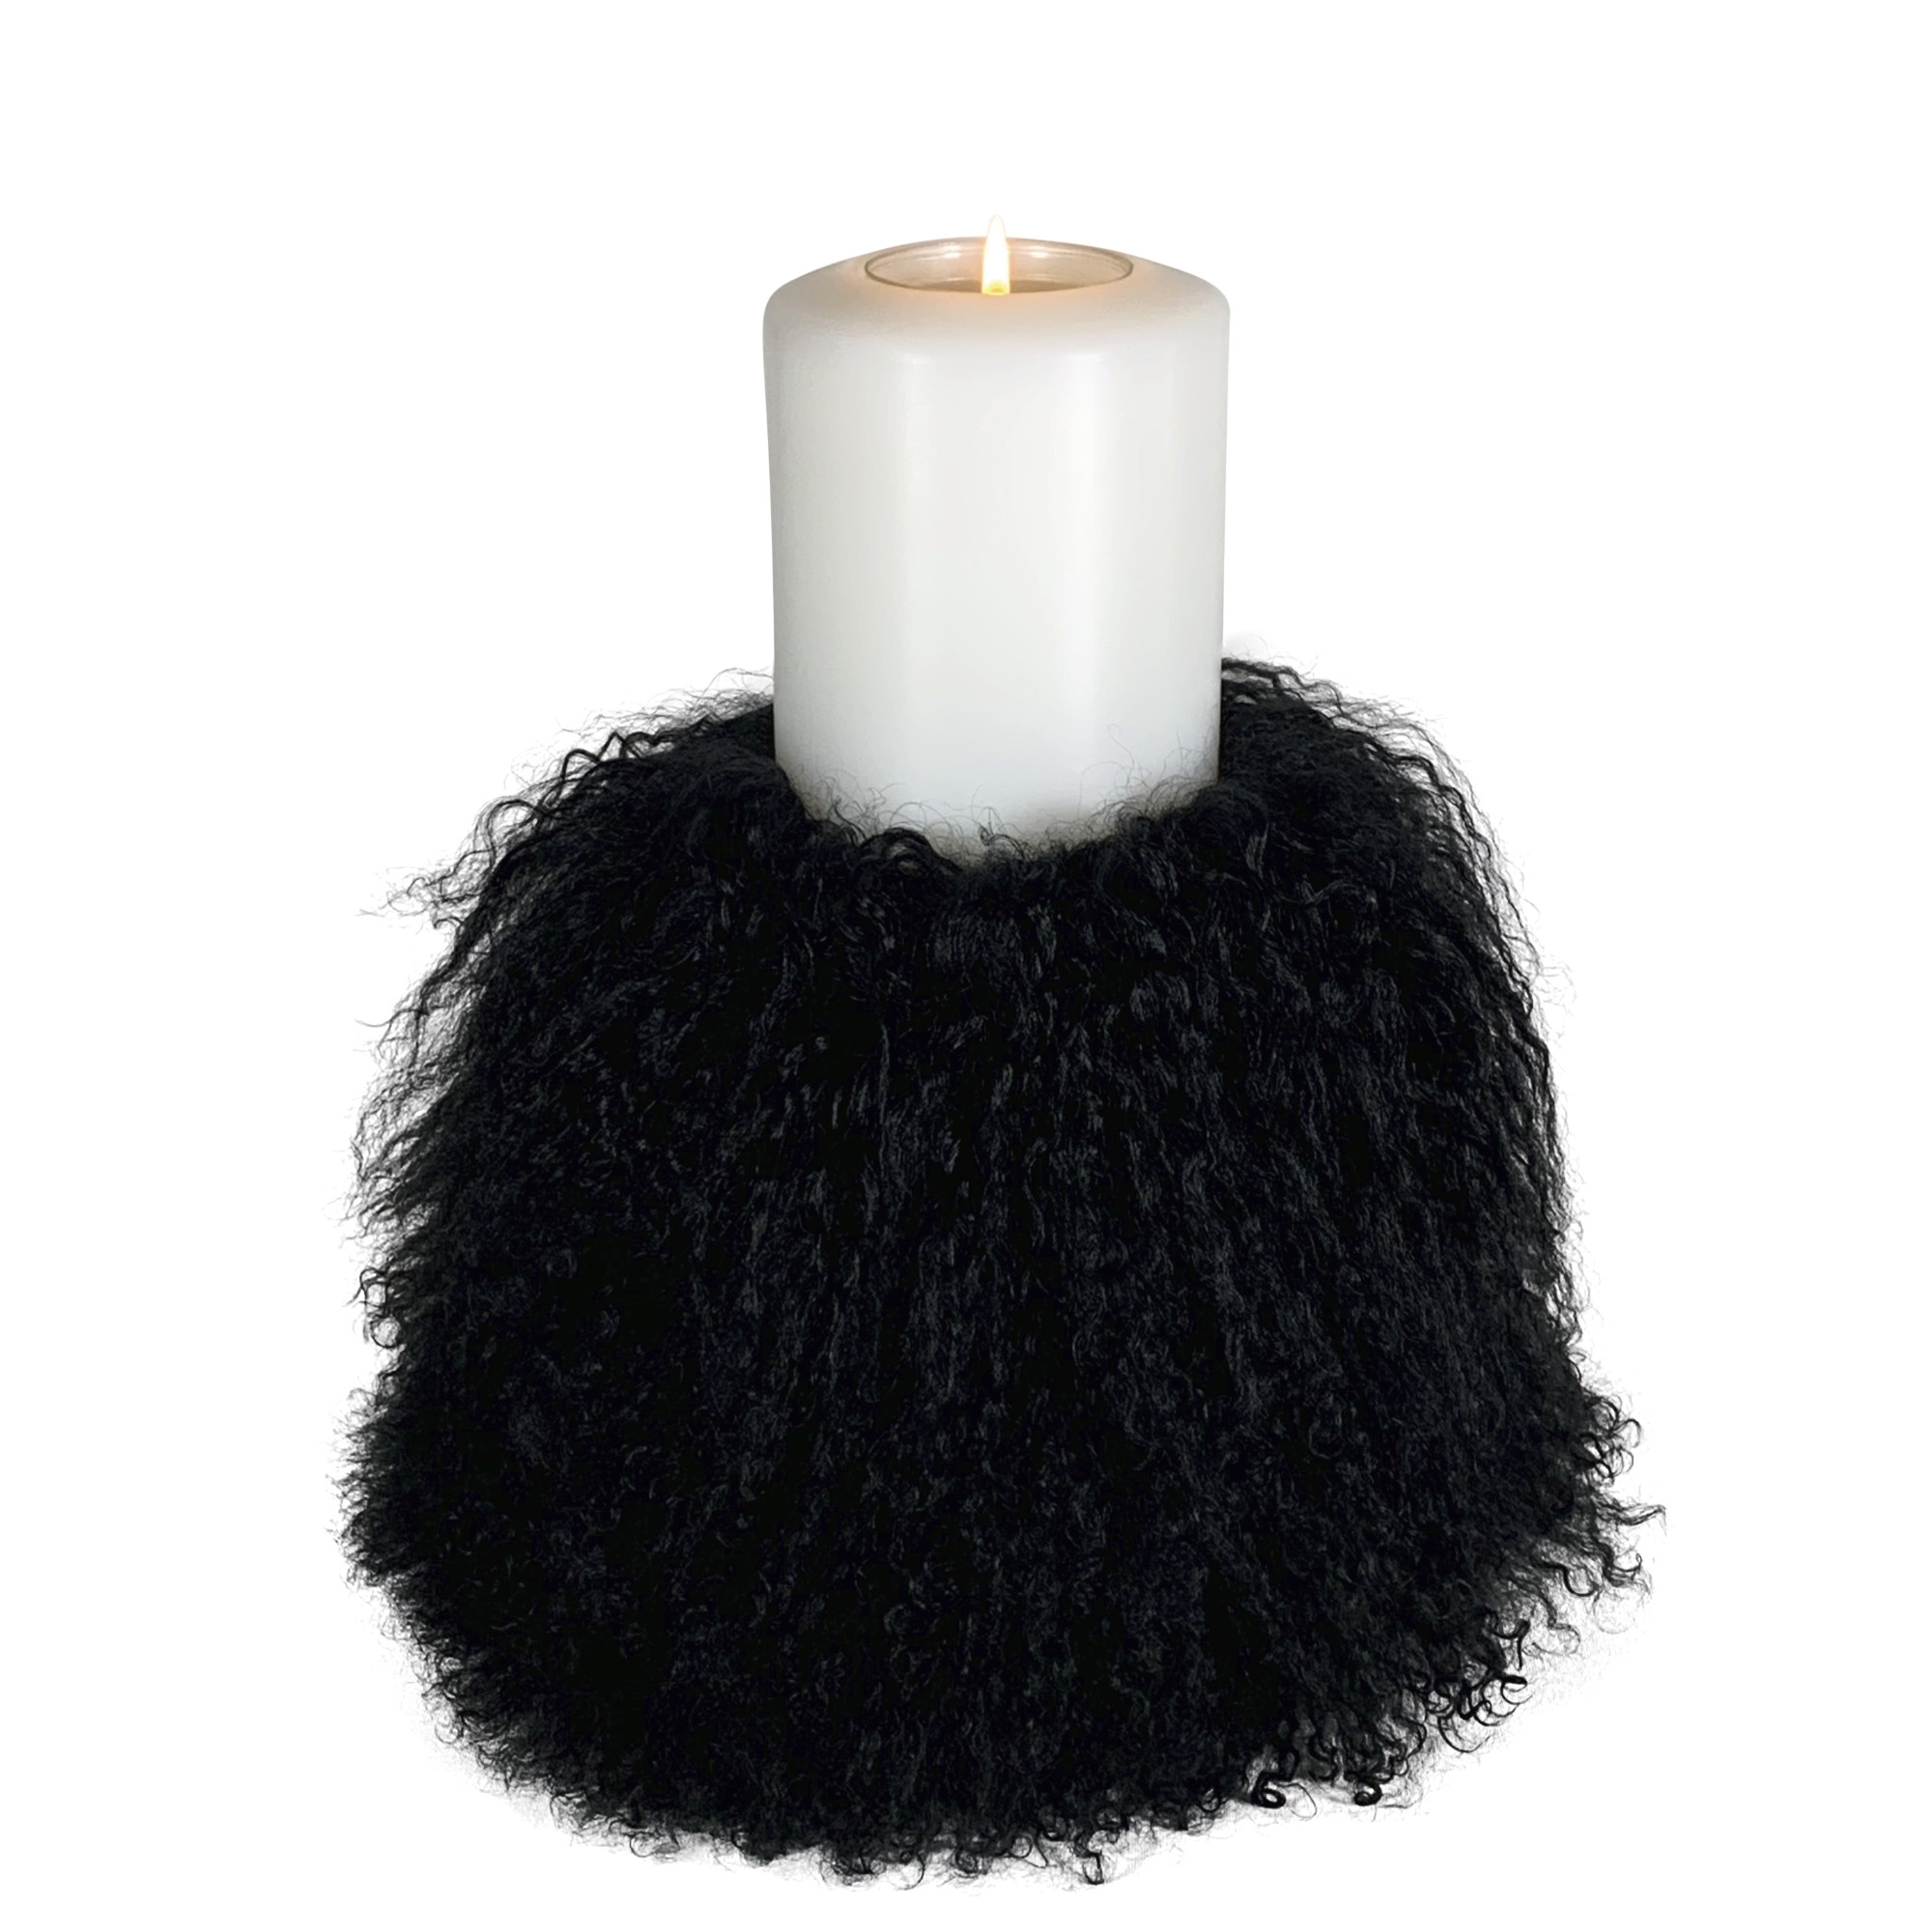 Qult Farluce candle real fur - Tibet Lamp black - Candle Cover - Ø 10 cm x H Fur 20 cm